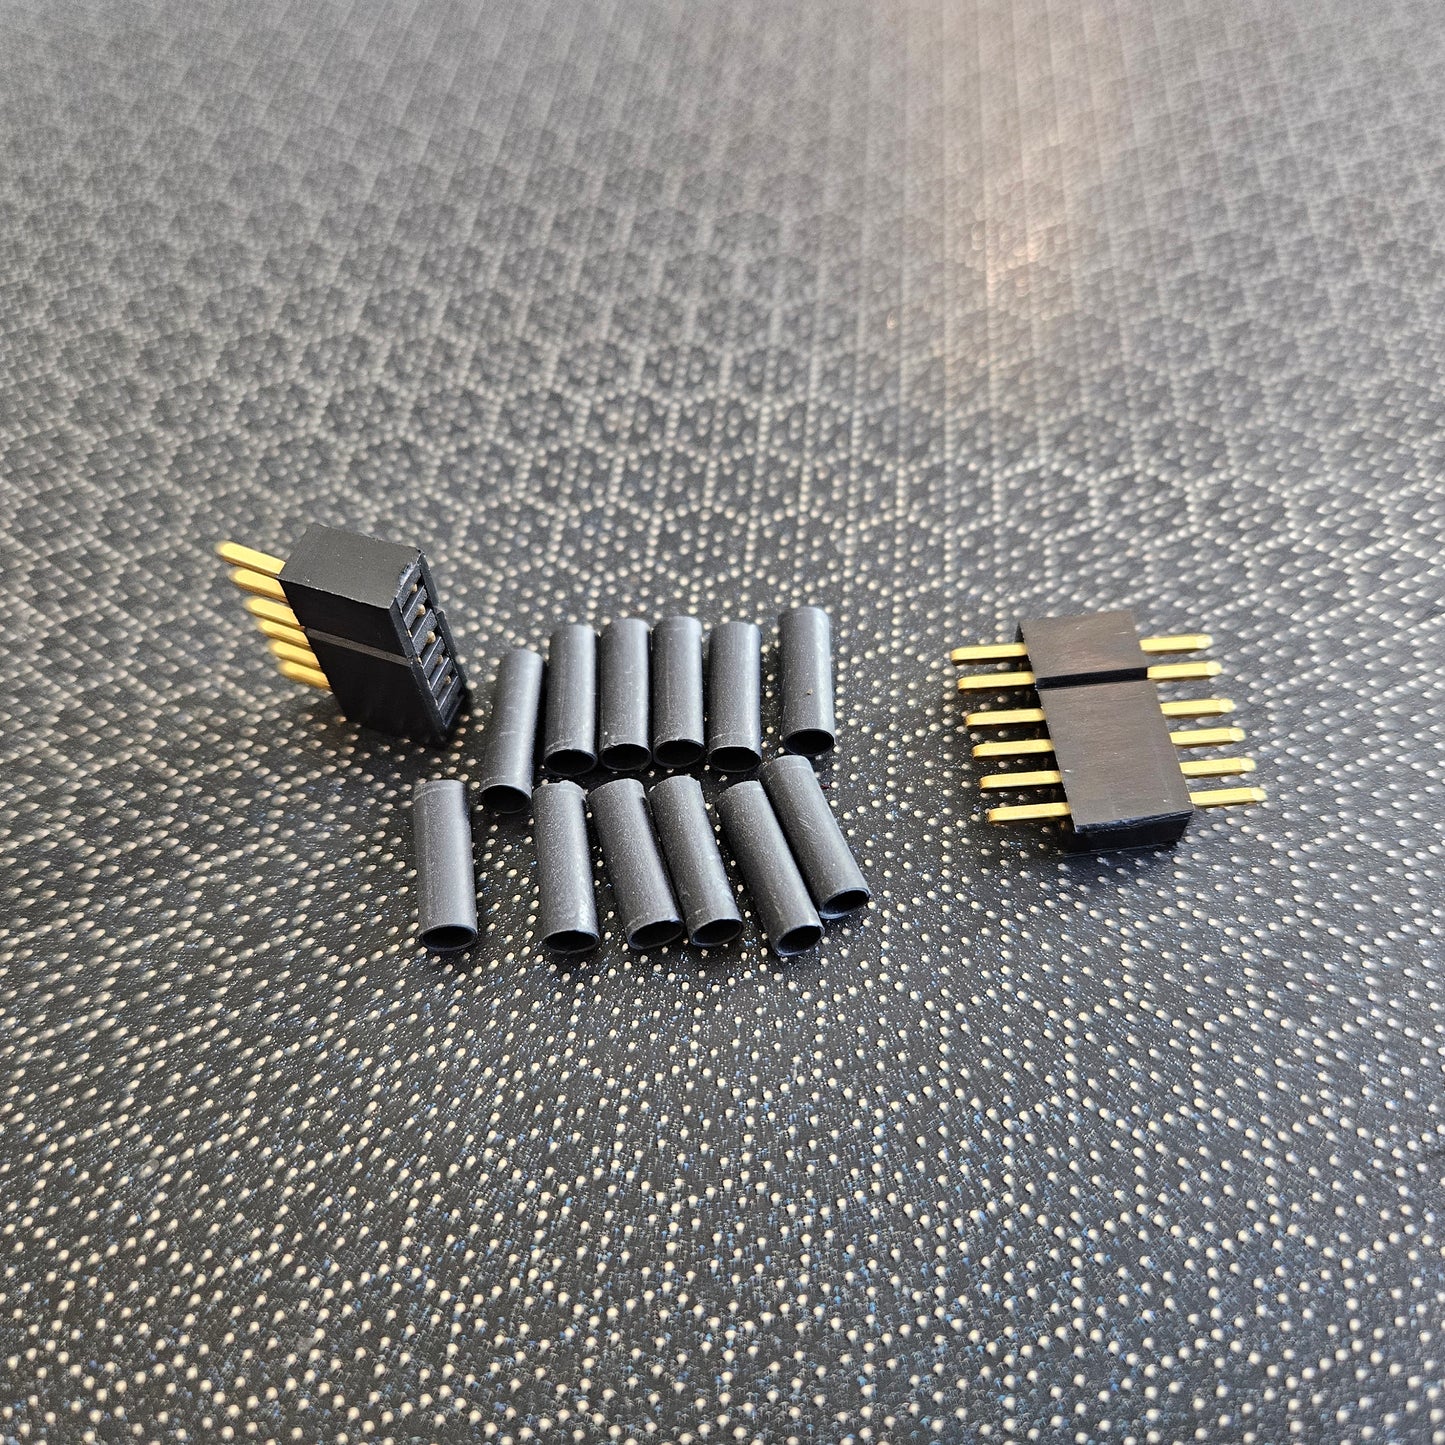 6 Pin Connector (pair)